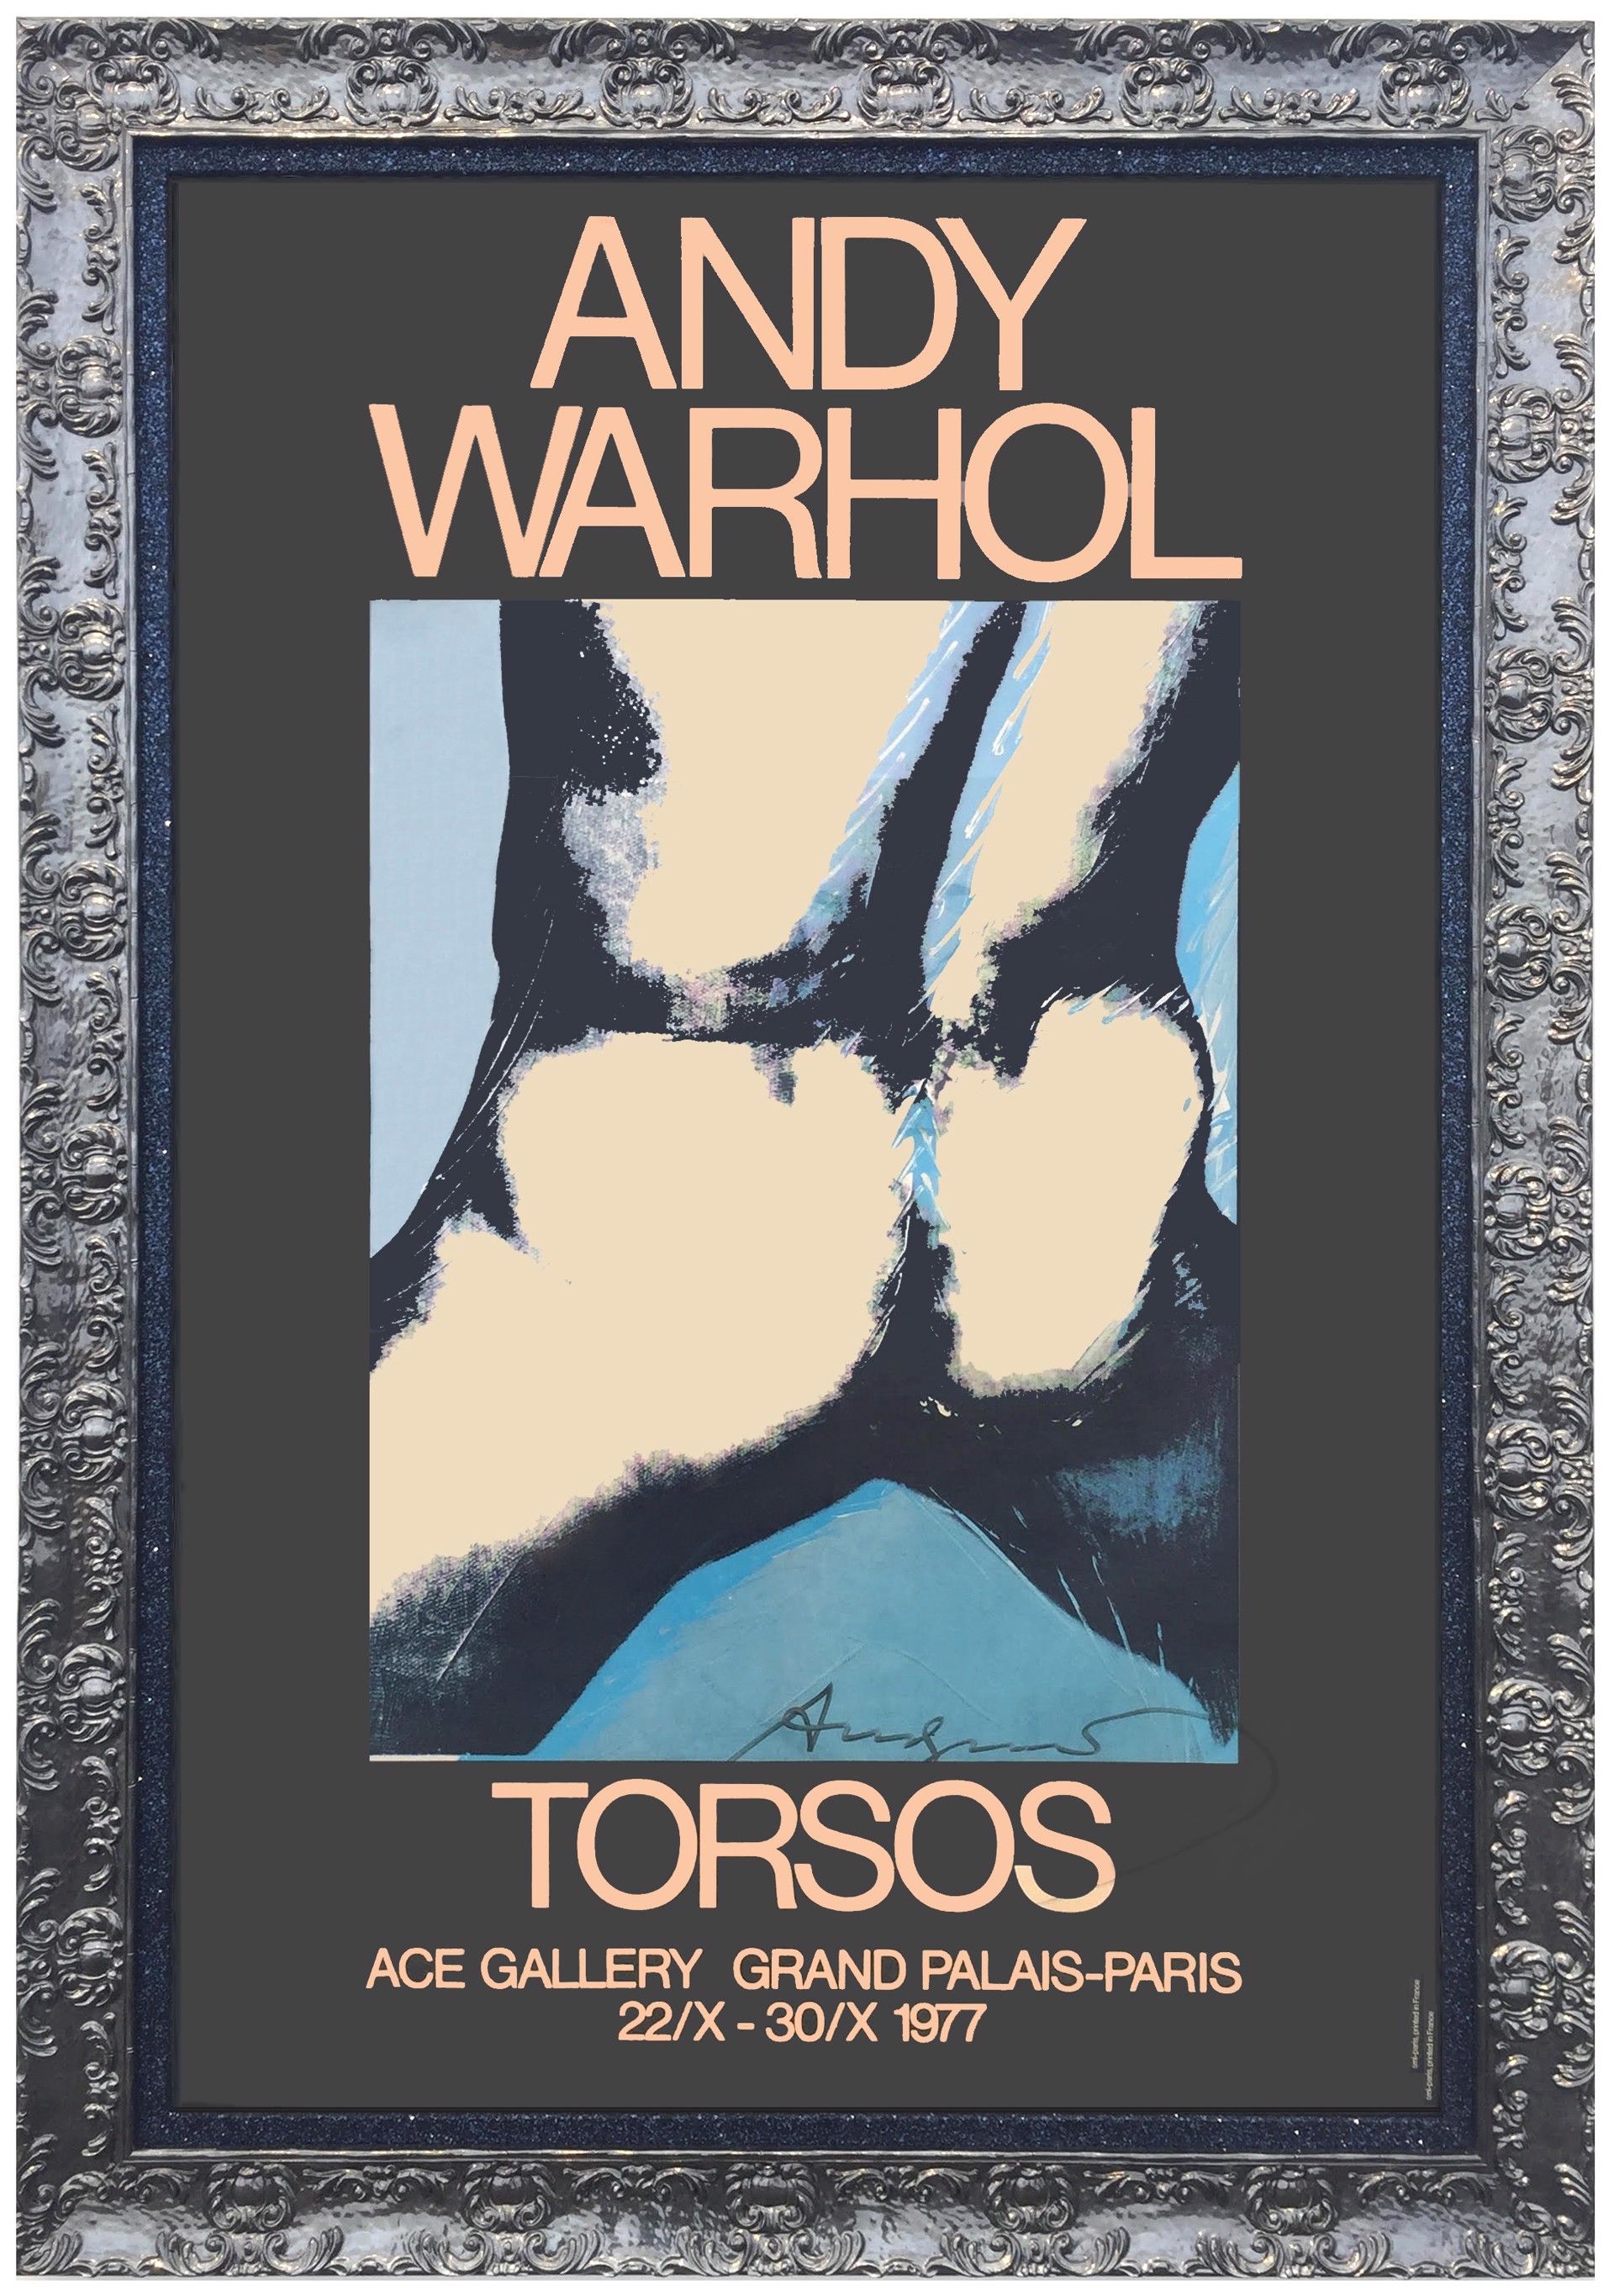 Torsos by Andy Warhol